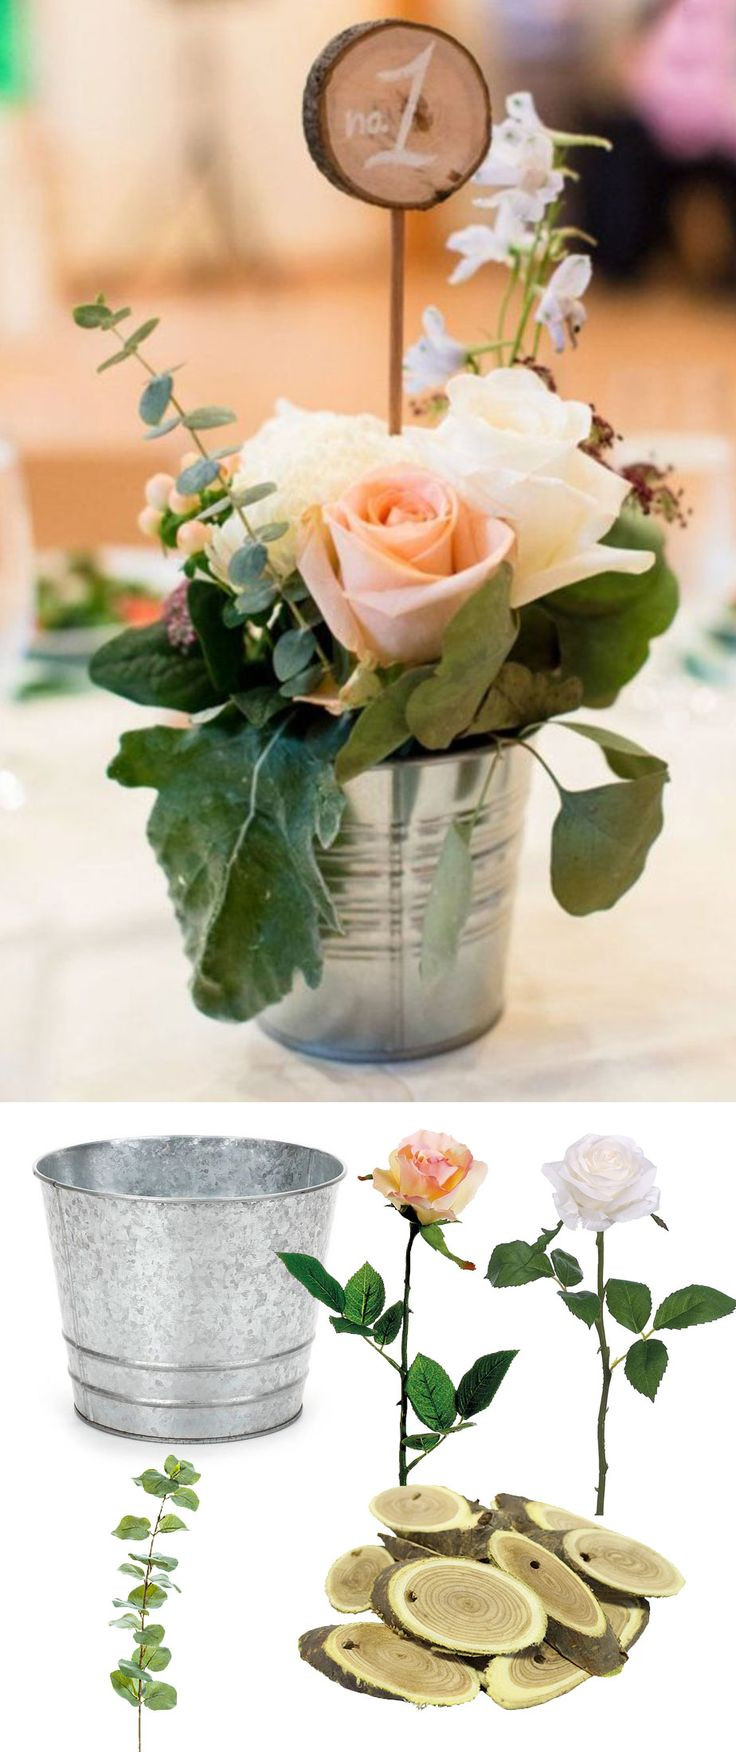 DIY Wedding Table Centerpieces
 The 25 best Tin buckets ideas on Pinterest